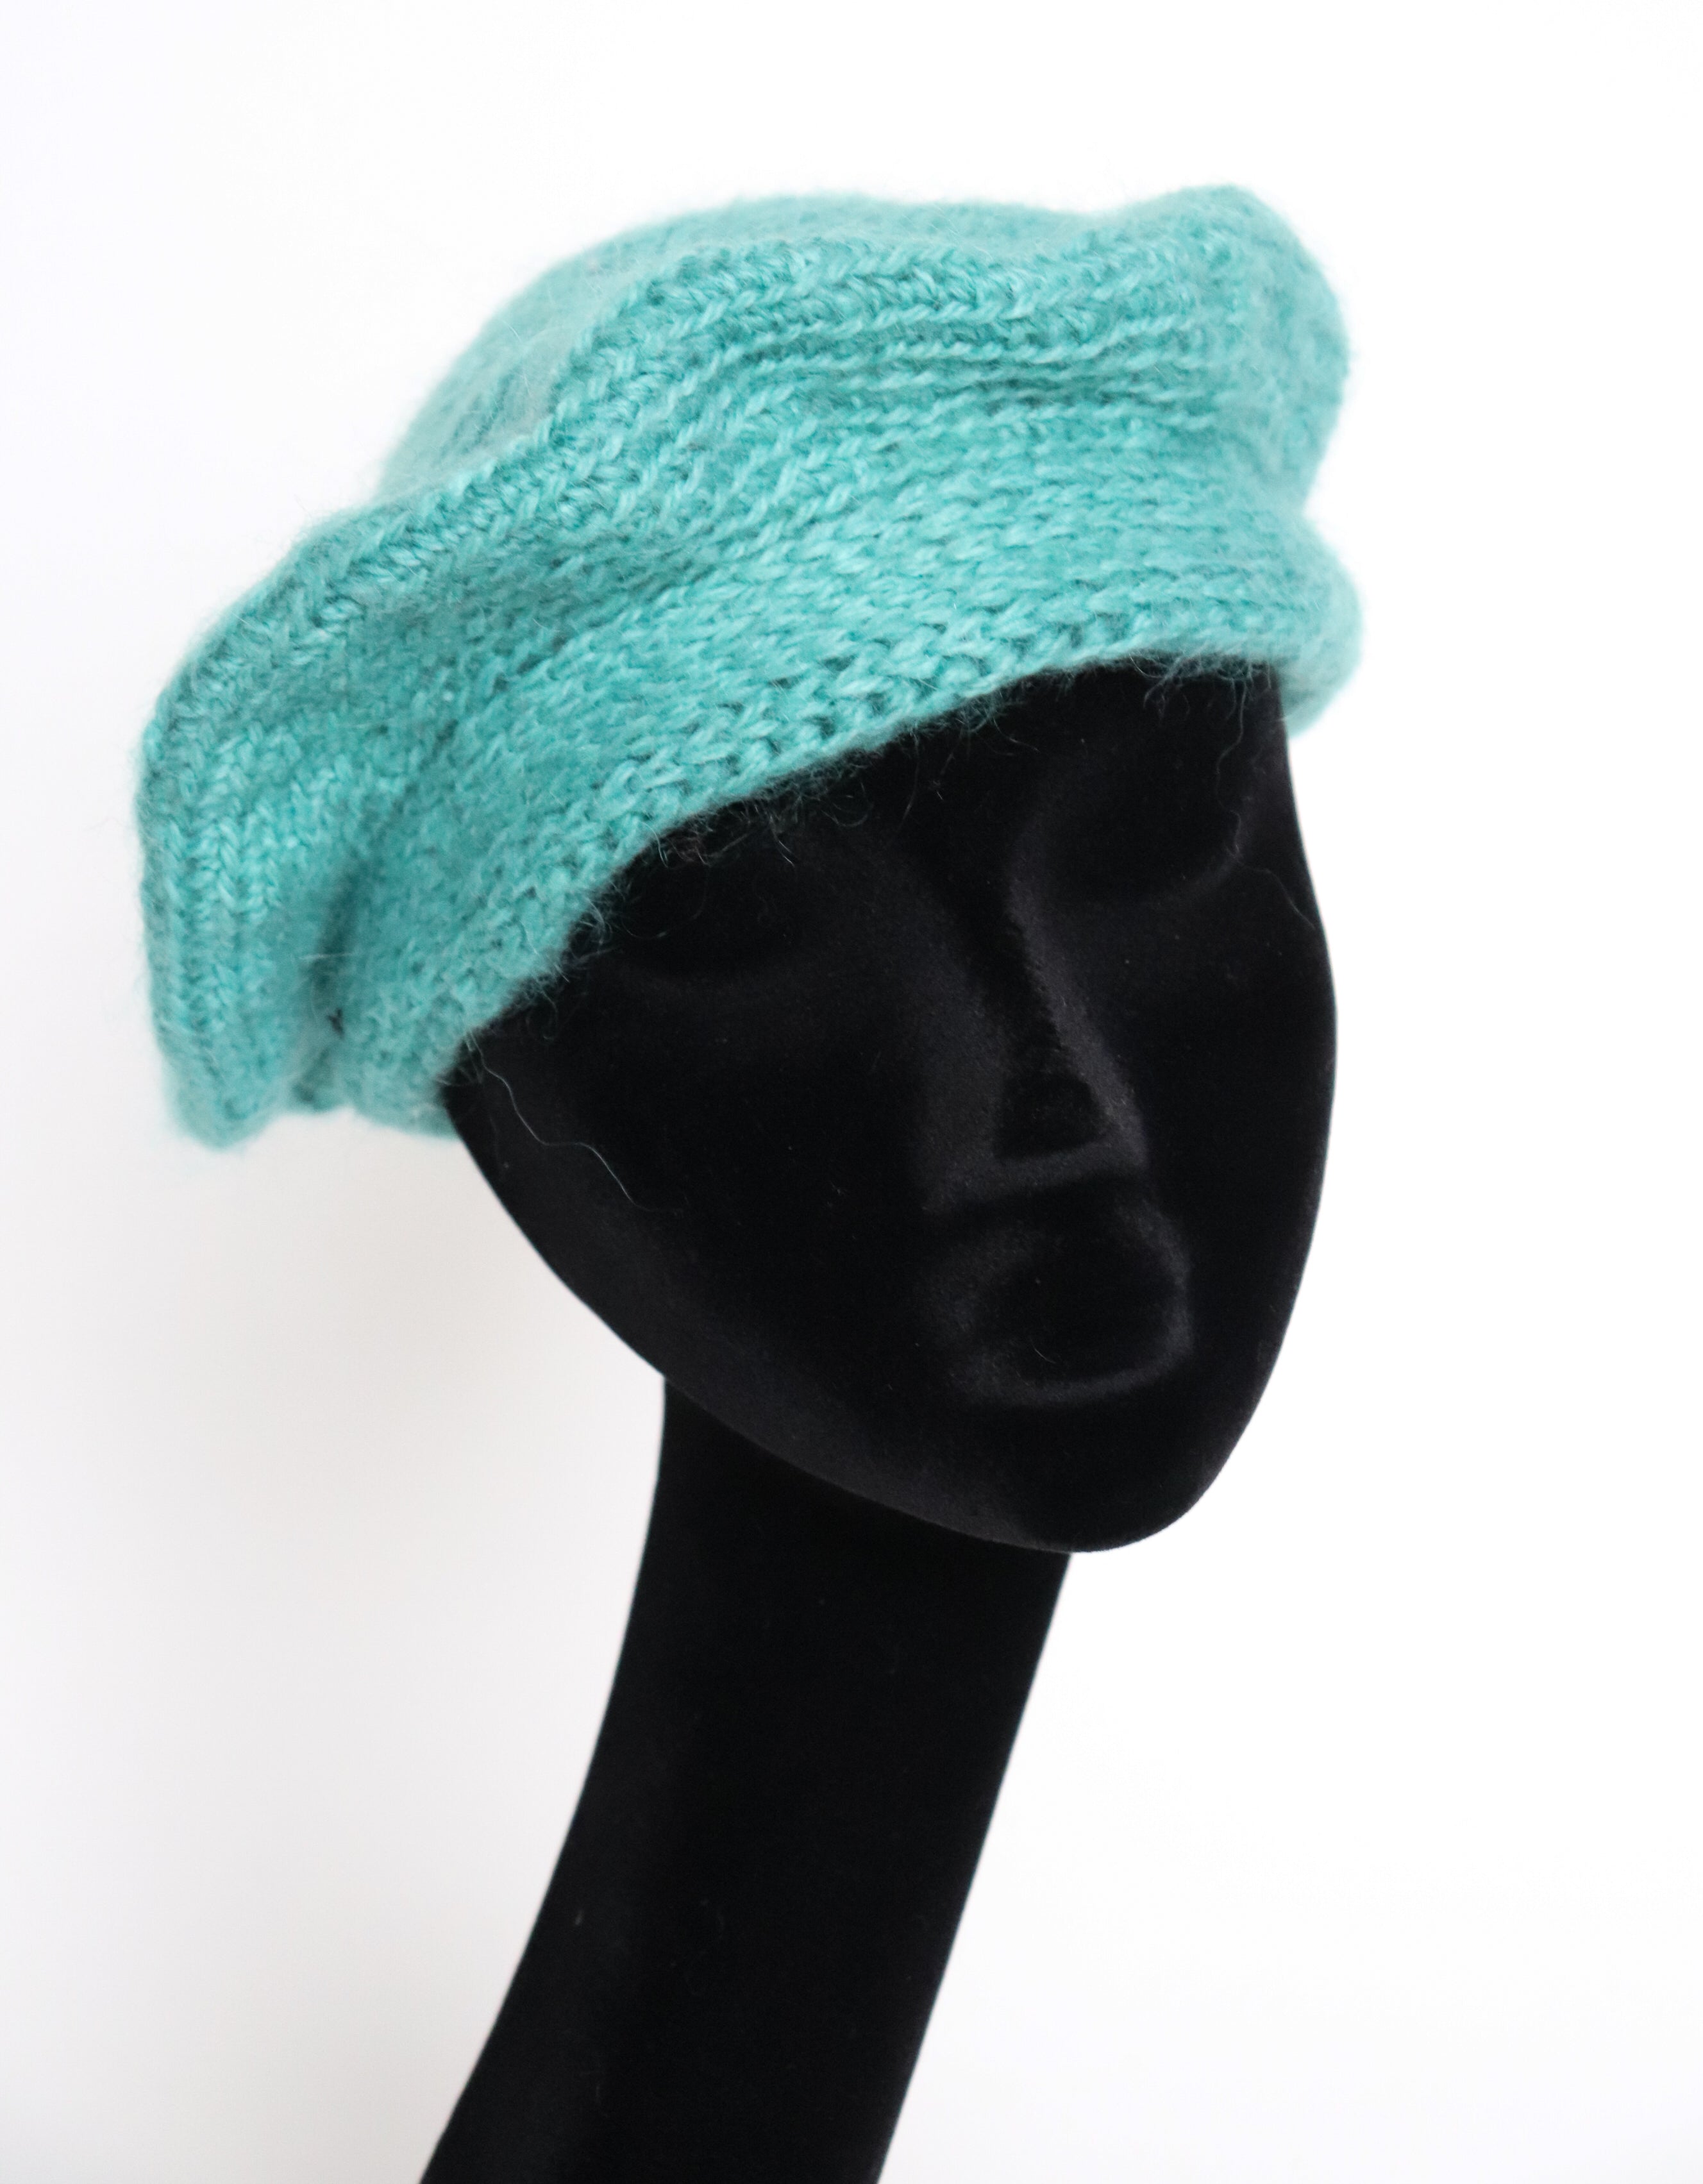 Vintage Wool Hand Knitted Beret - Aqua Green - Medium